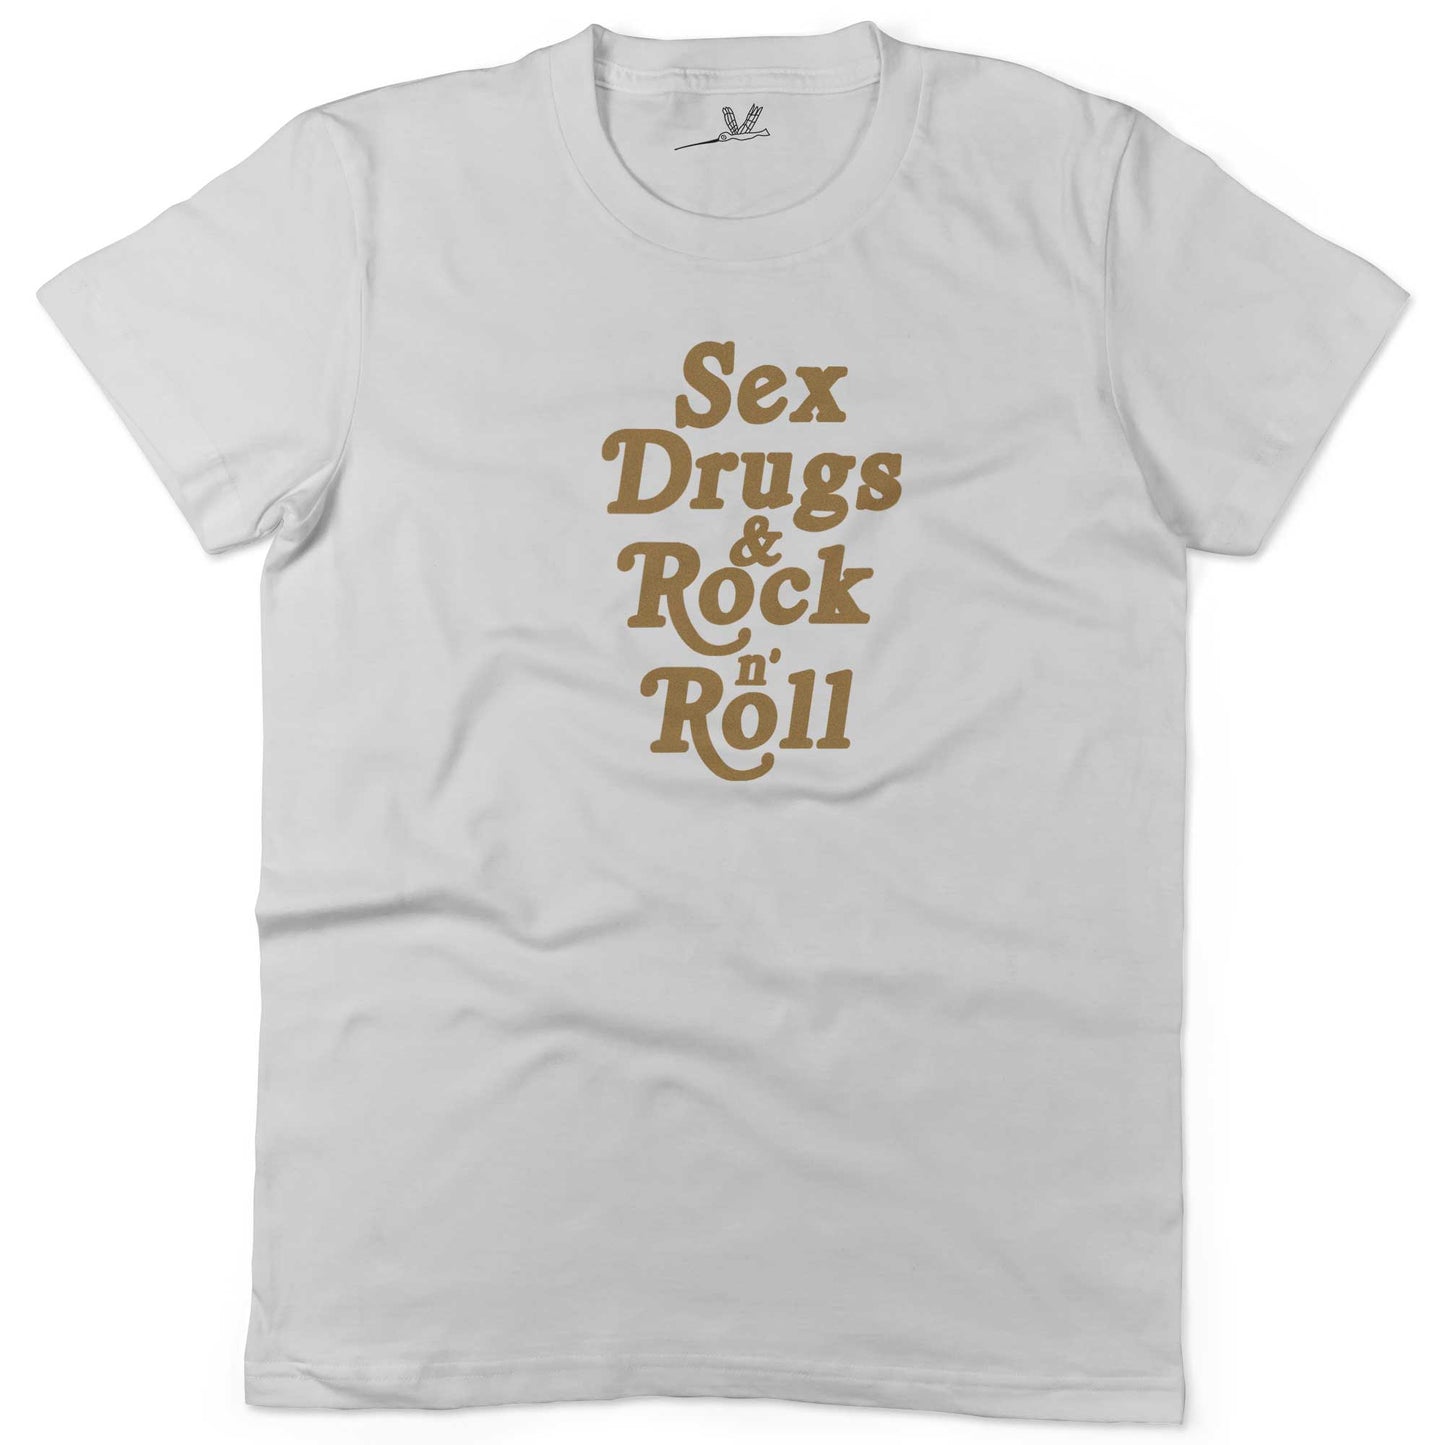 Sex, Drugs & Rock 'n Roll Unisex Or Women's Cotton T-shirt-White-Woman